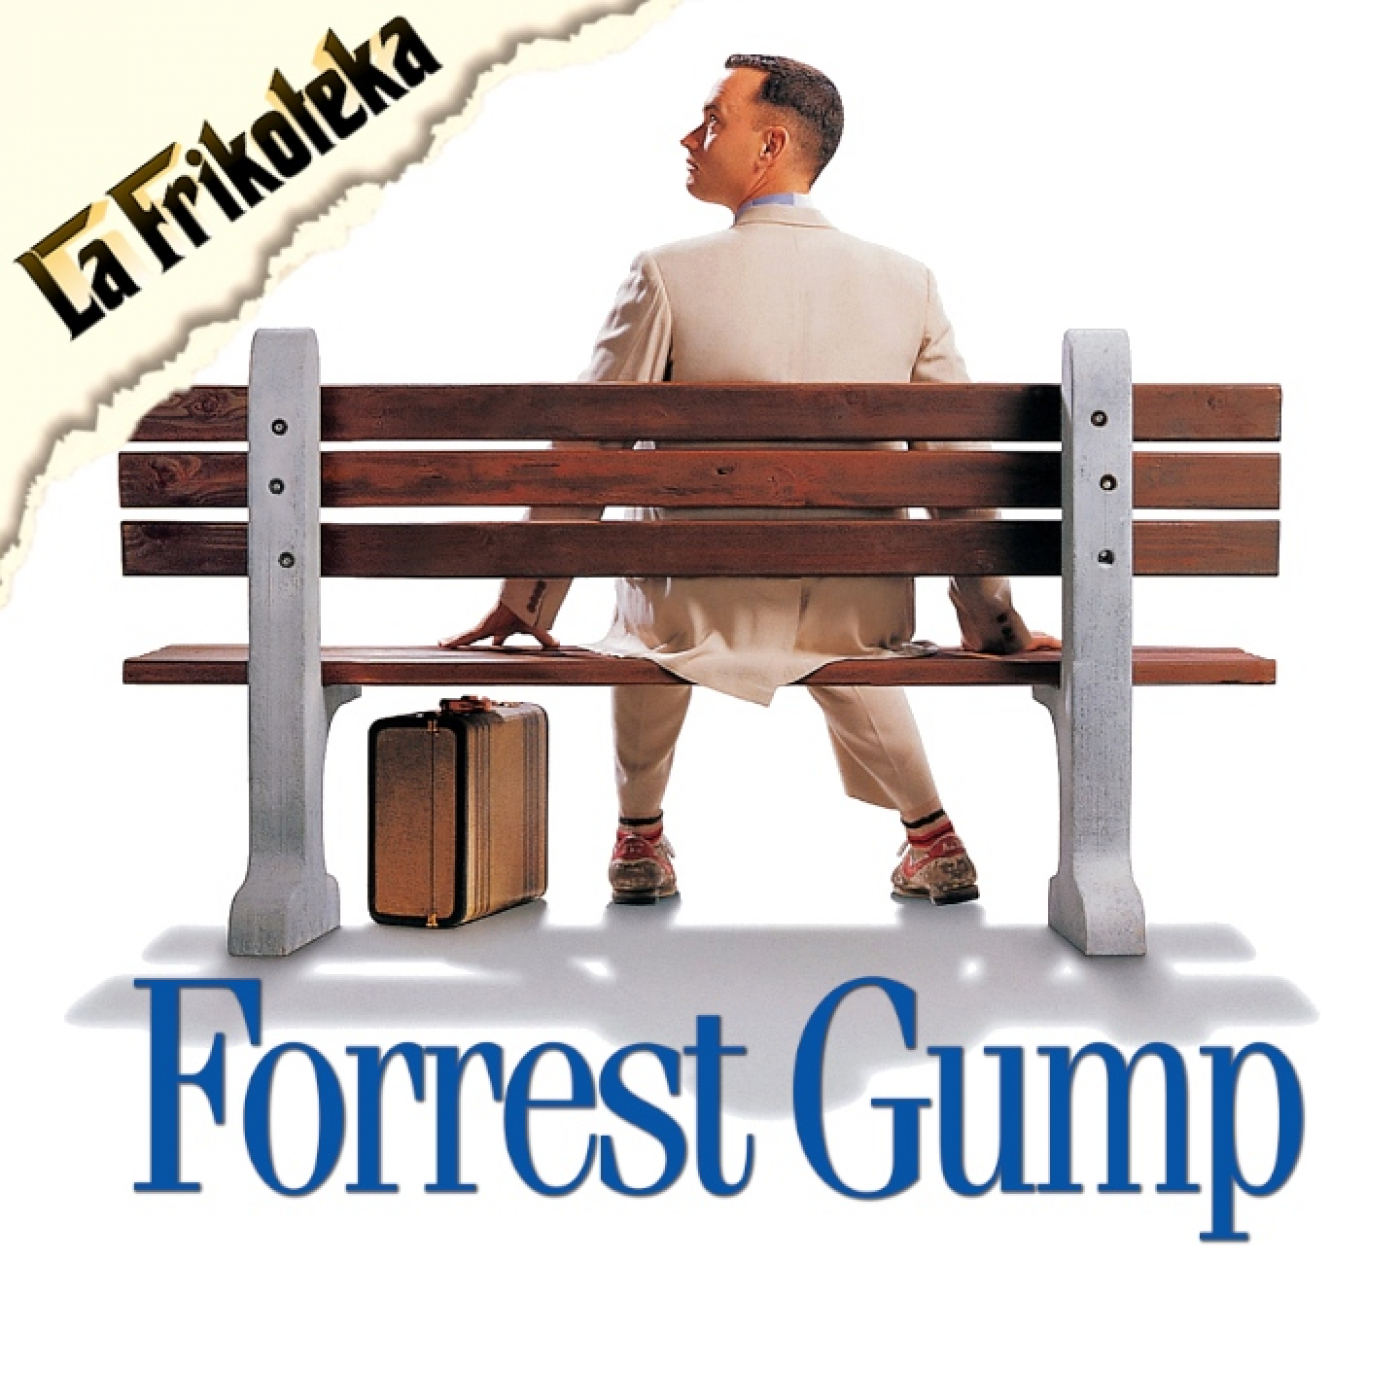 143 - Forrest Gump (1994) - Episodio exclusivo para mecenas